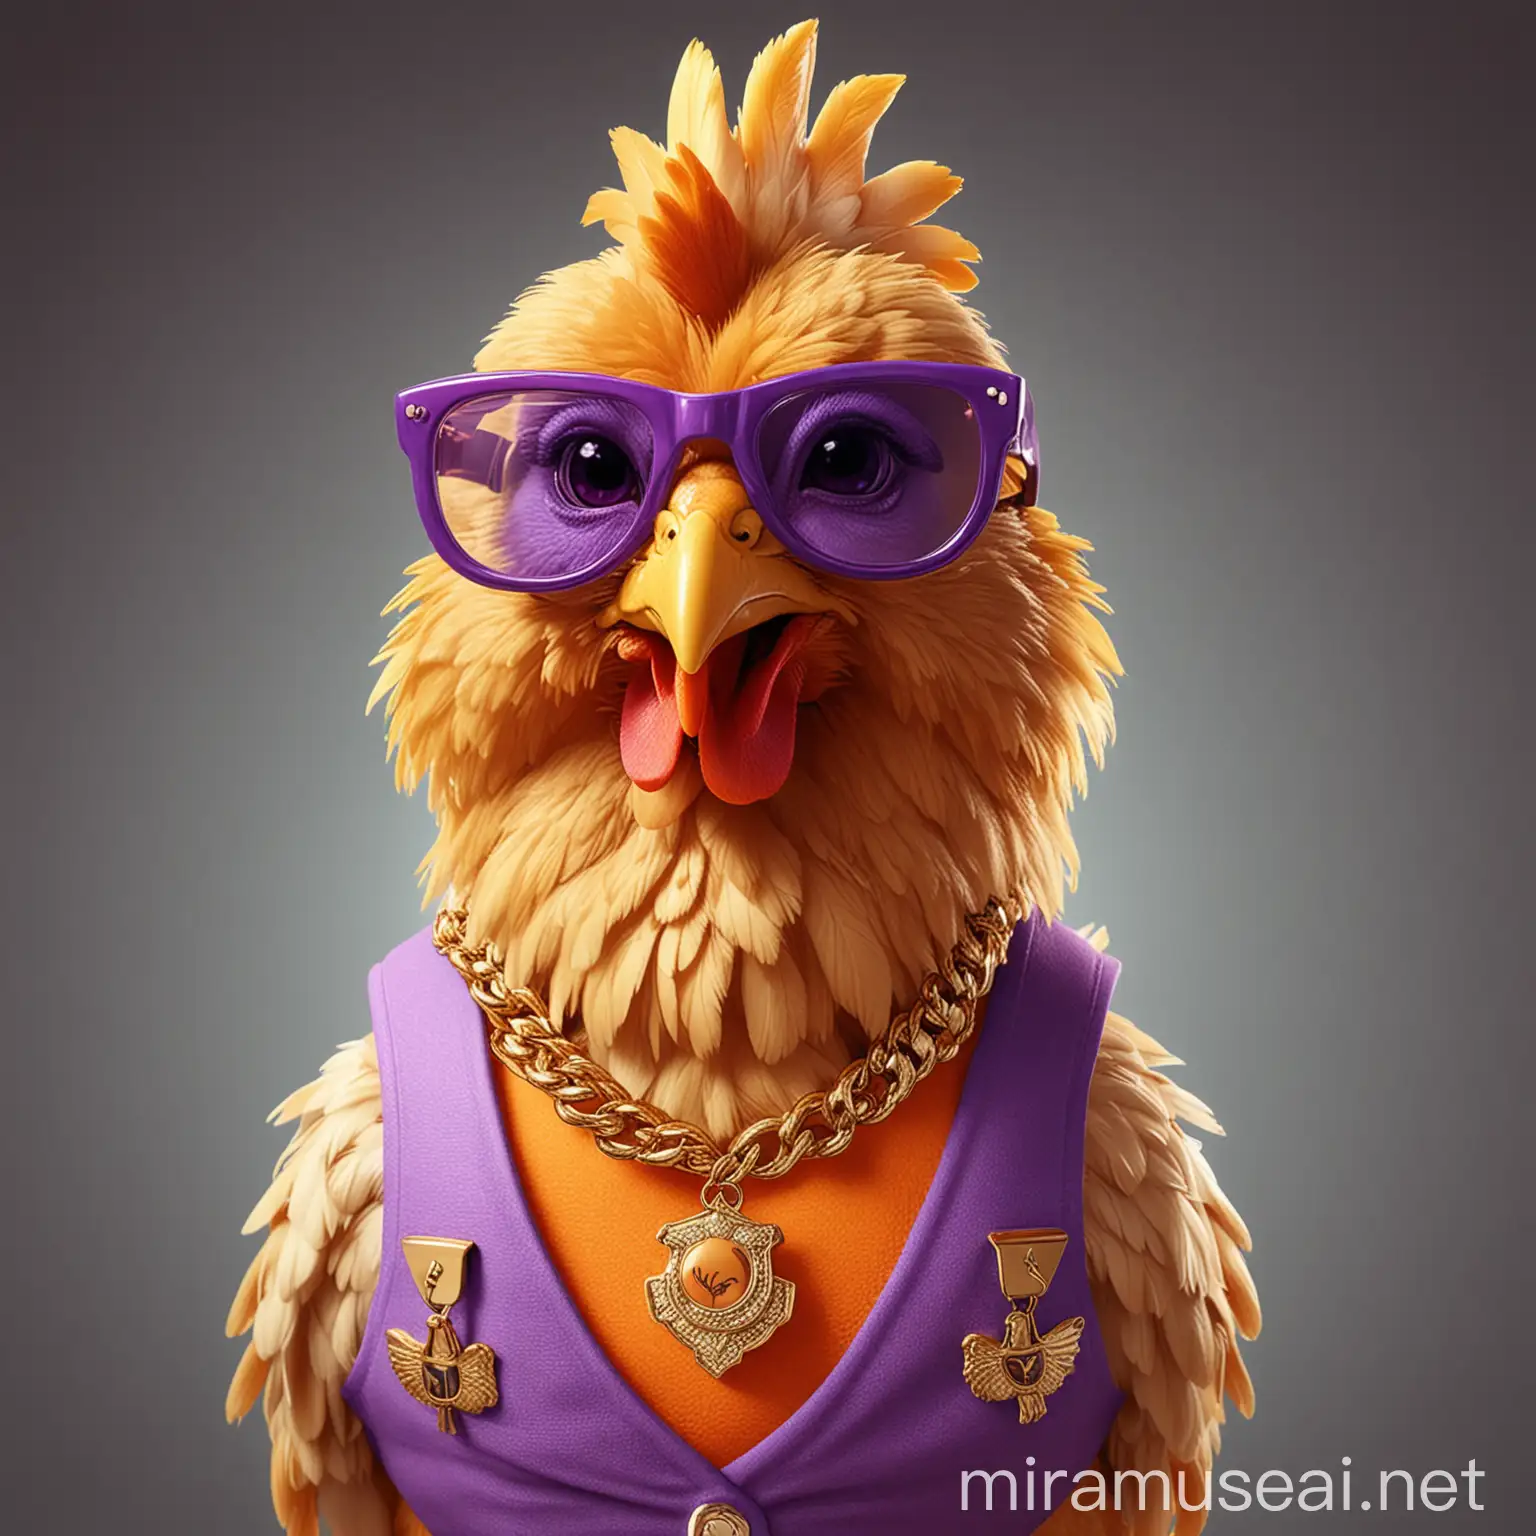 Cool Cartoon Chicken with Purple Sunglasses and Stylish Attire